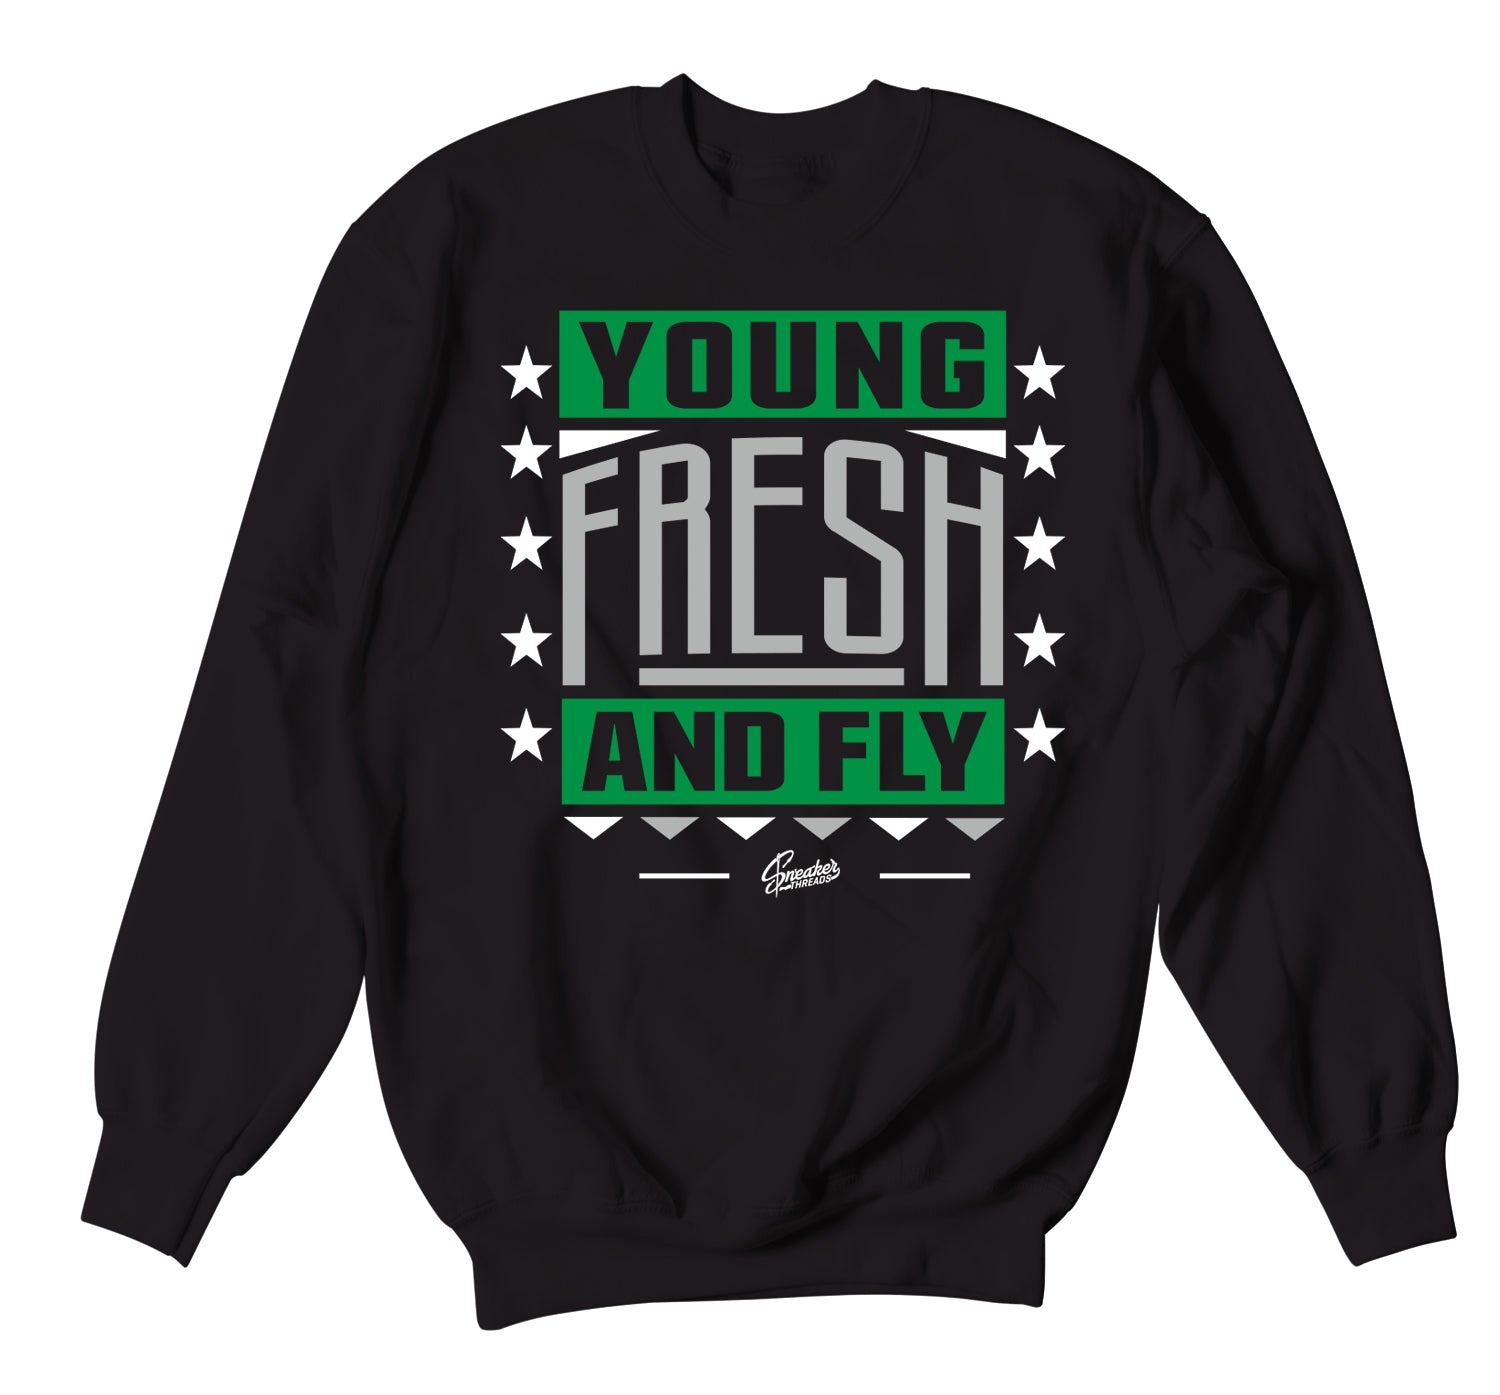 Young Fresh Sweater - Retro 3 Pine Green